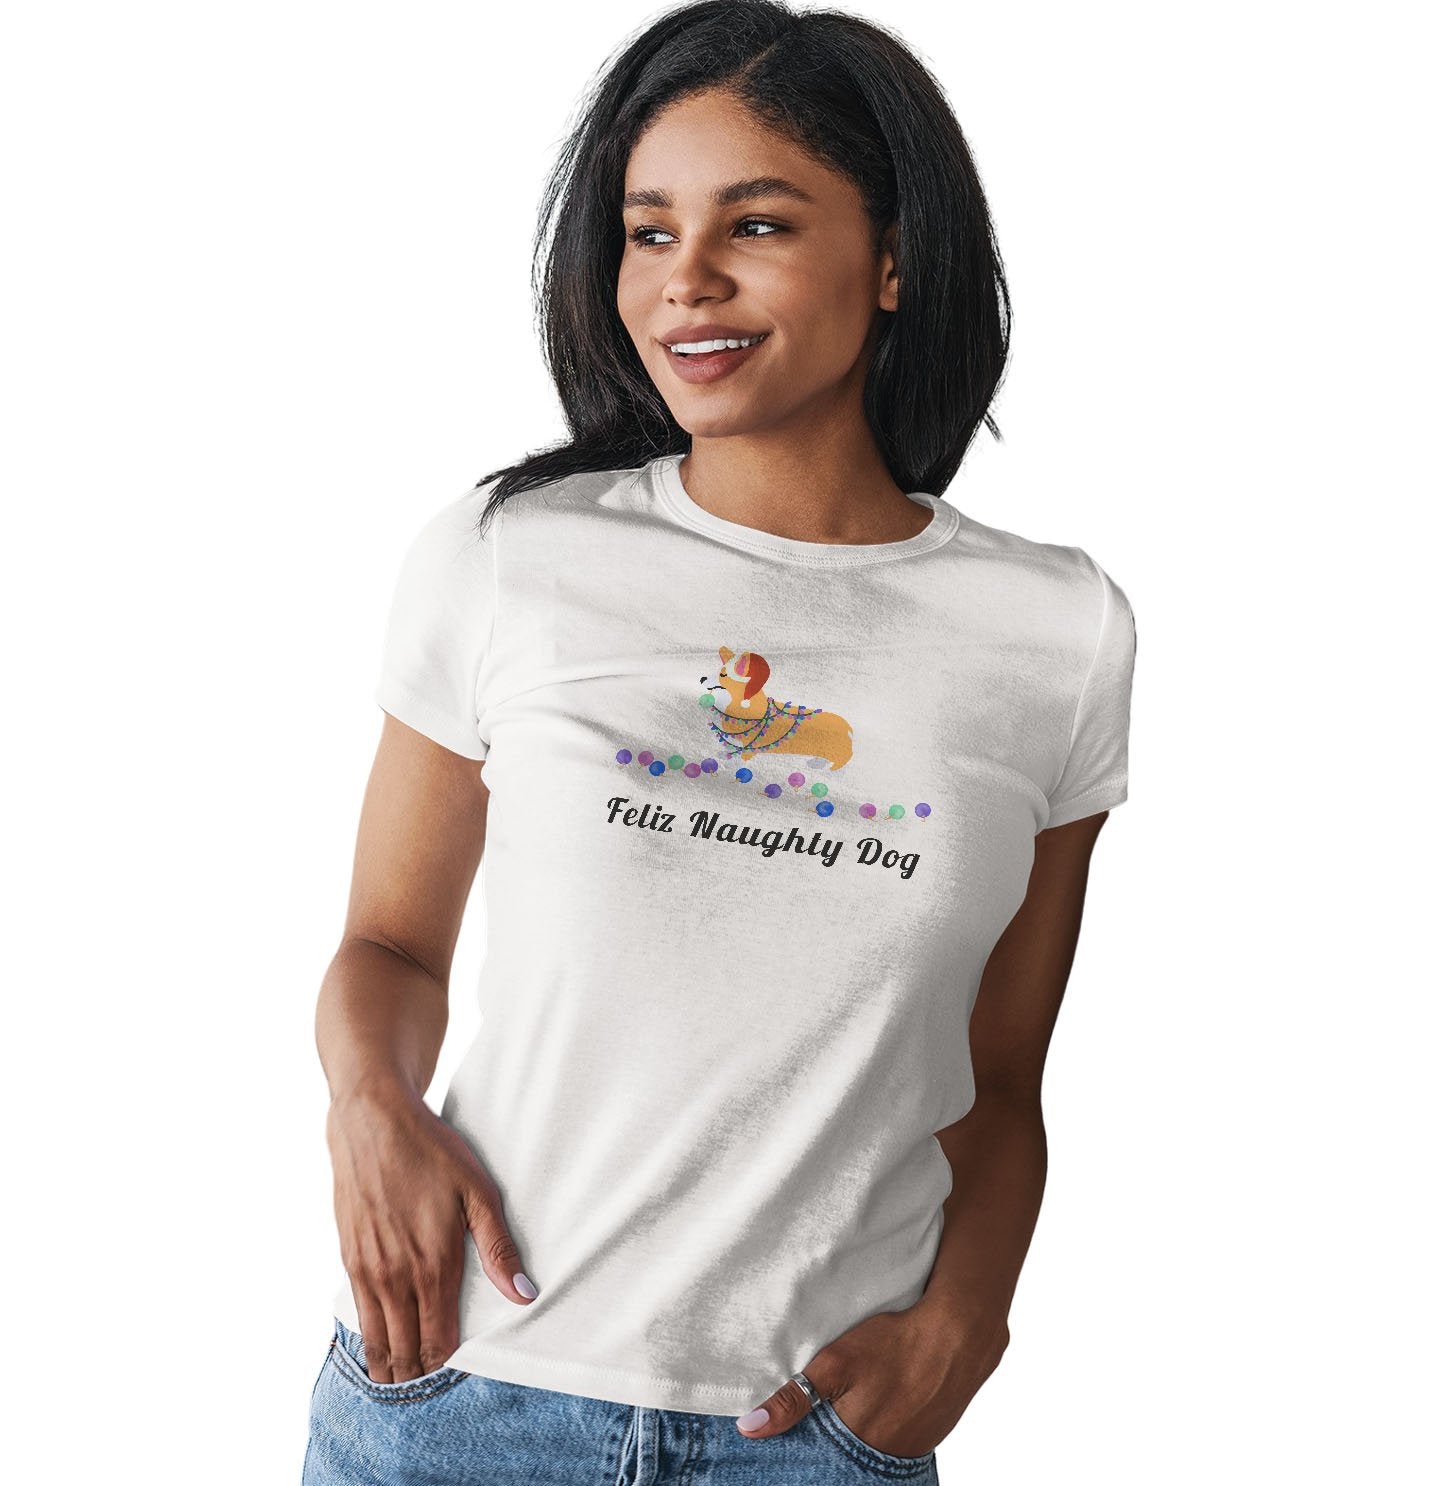 Feliz Naughty Dog Corgi - Women's Fitted T-Shirt